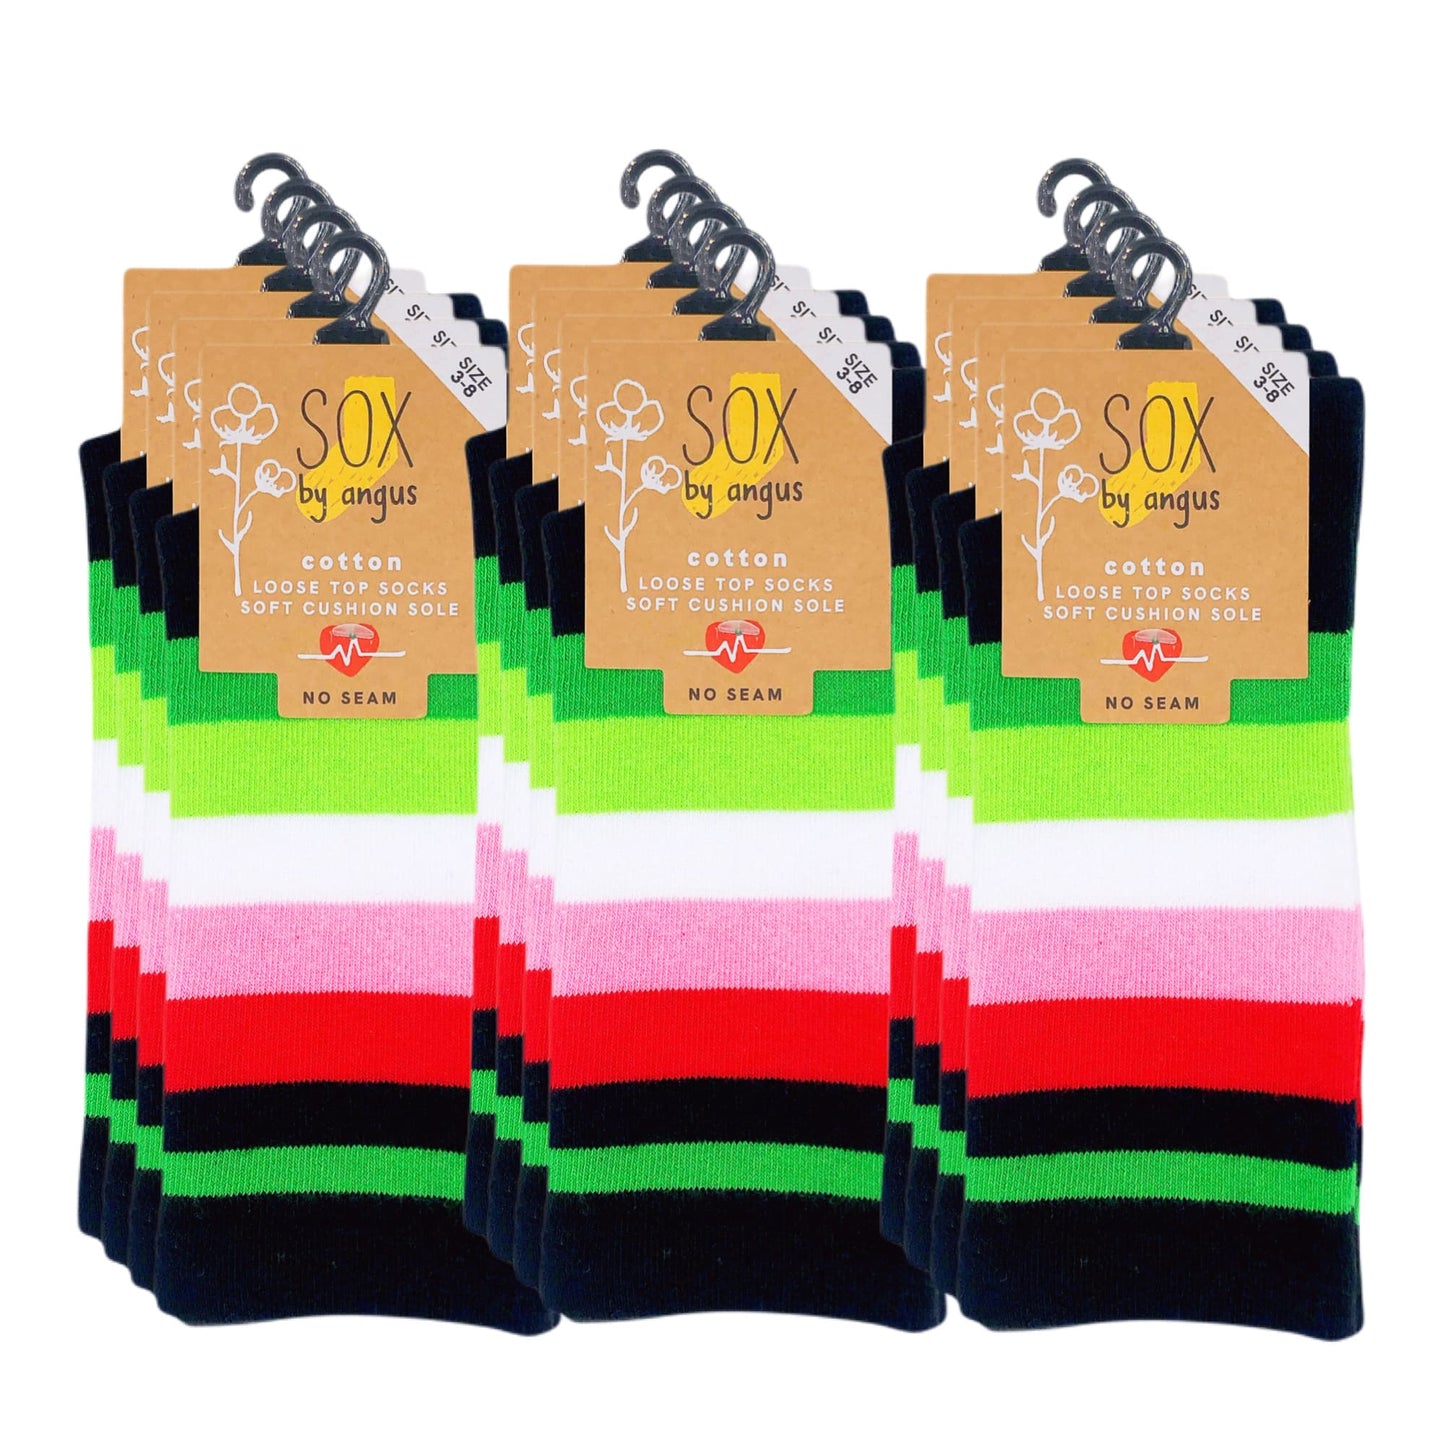 Cotton Loose Top Socks - NO SEAM - Wide Stripes